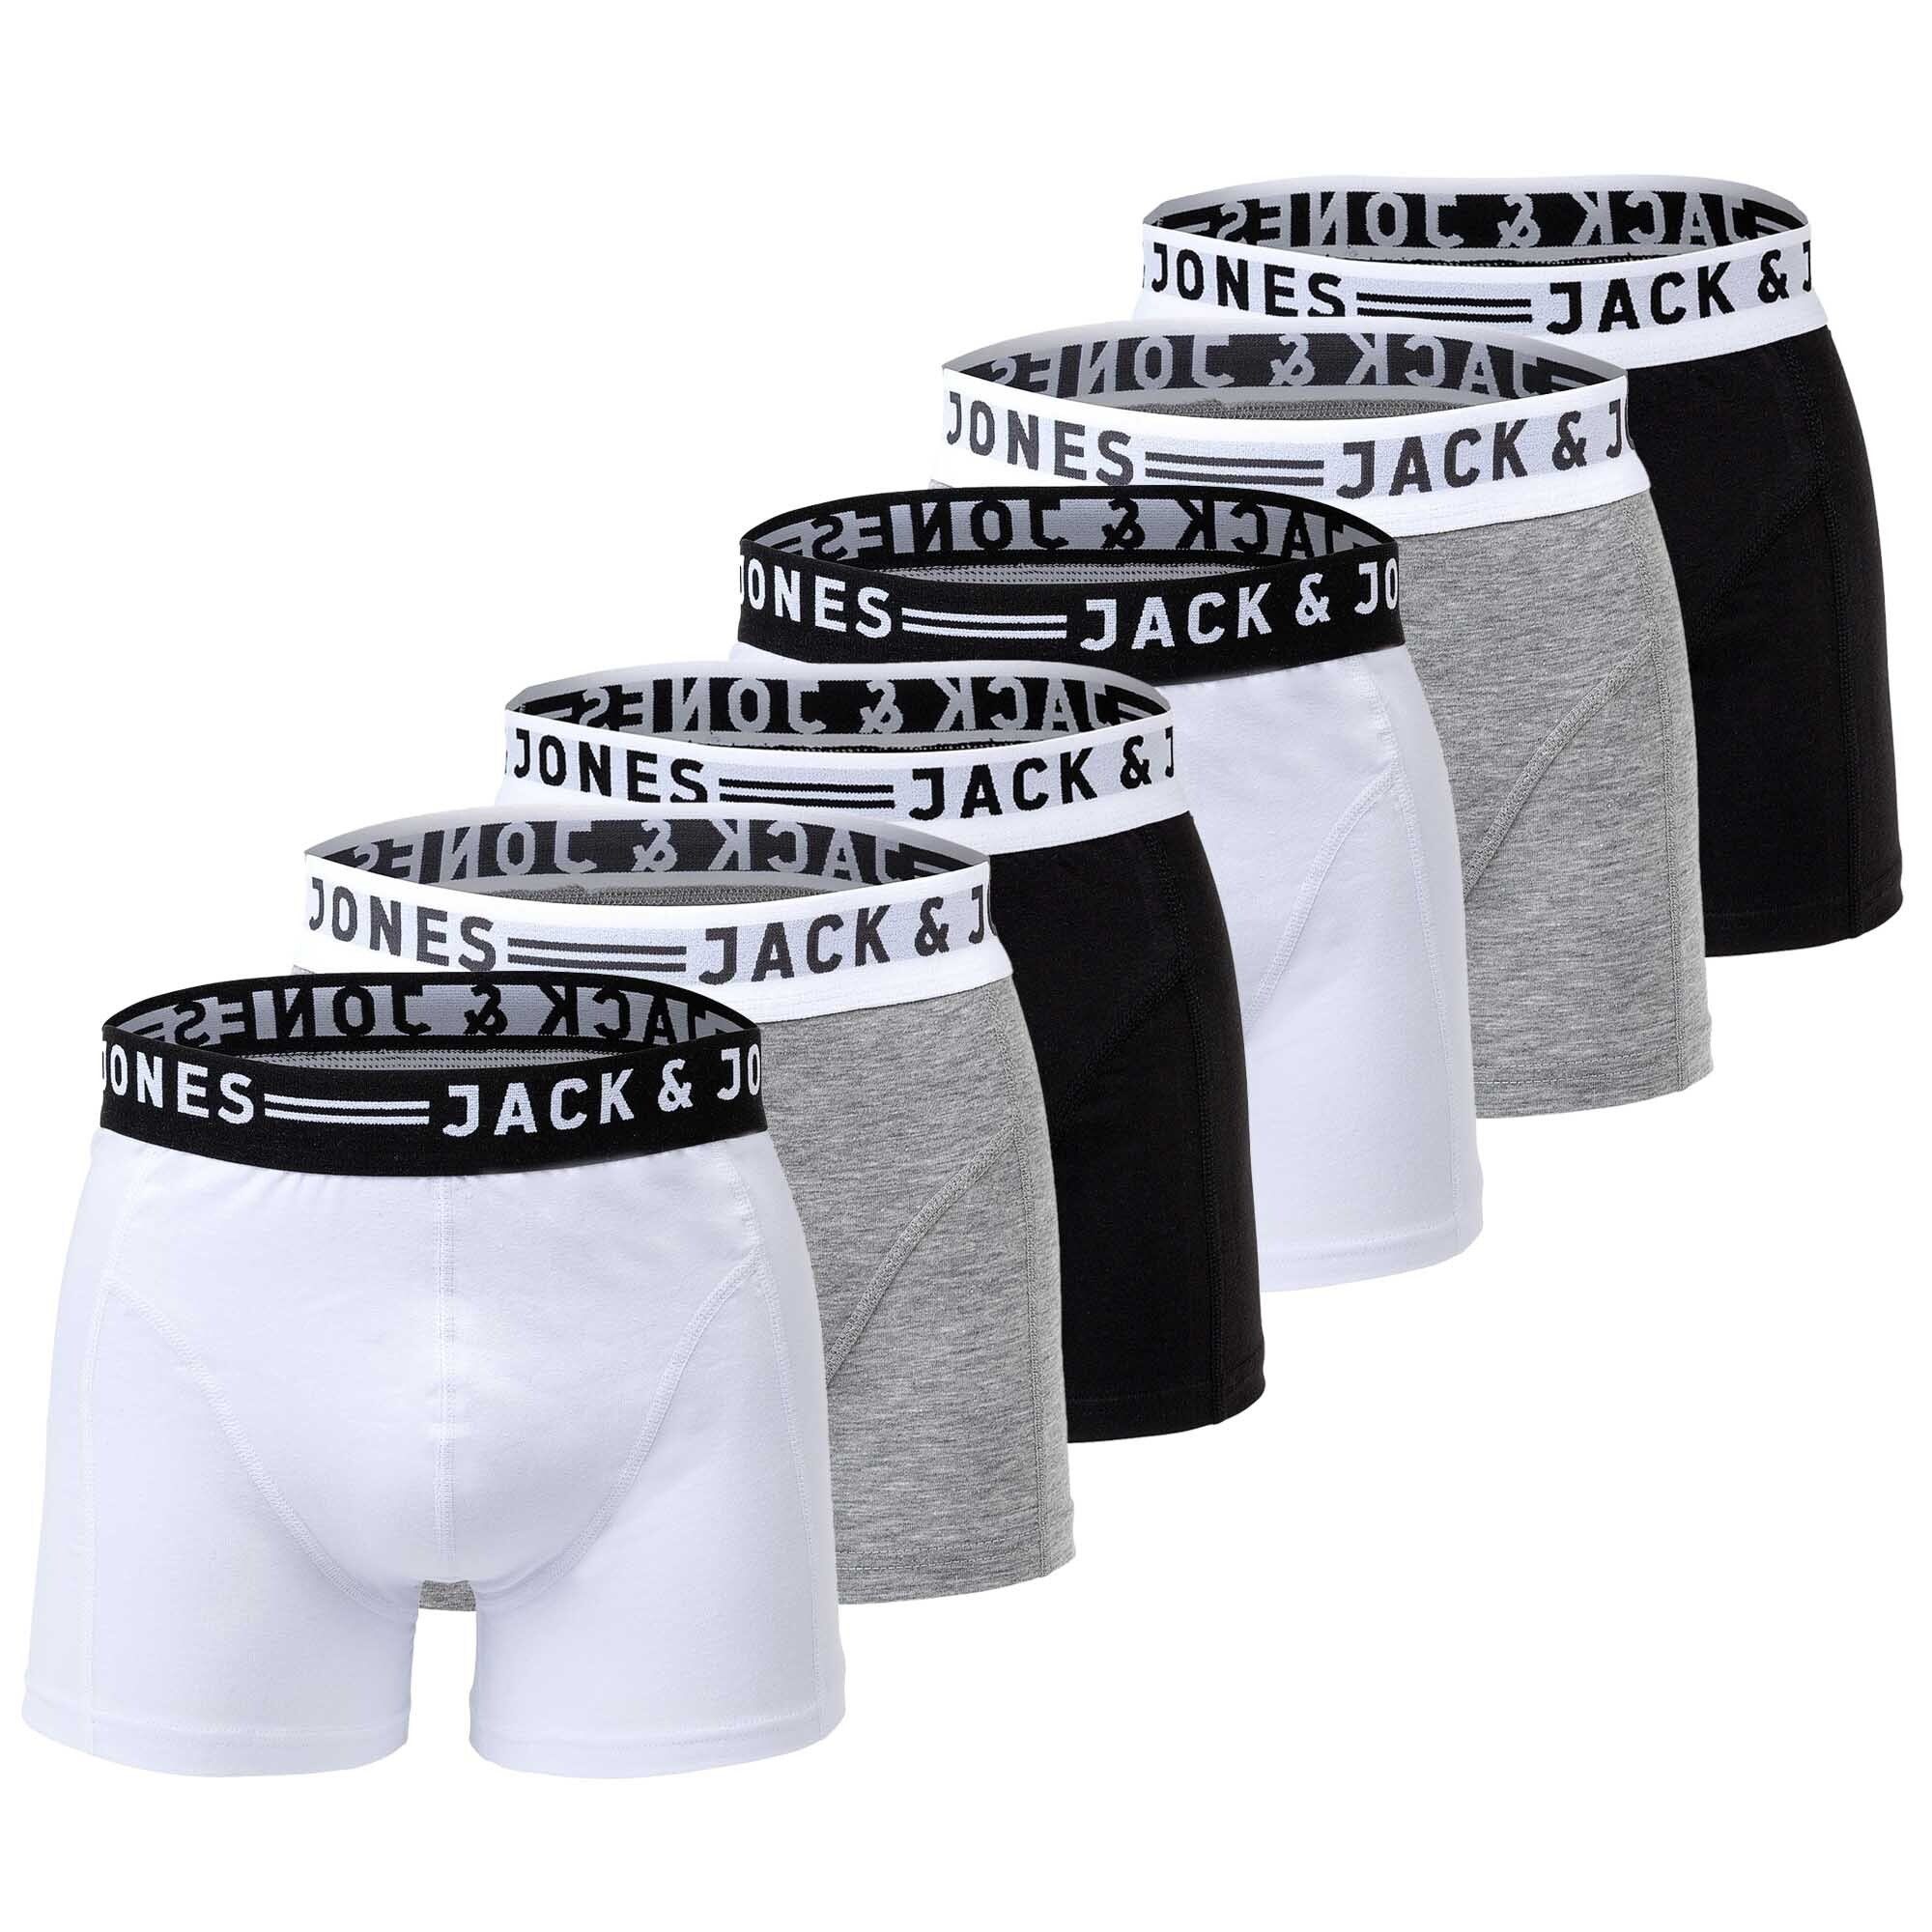 Jack & Jones Boxer Herren Boxer Shorts, 6er Pack - SENSE TRUNKS Schwarz/Grau/Weiß | Boxershorts